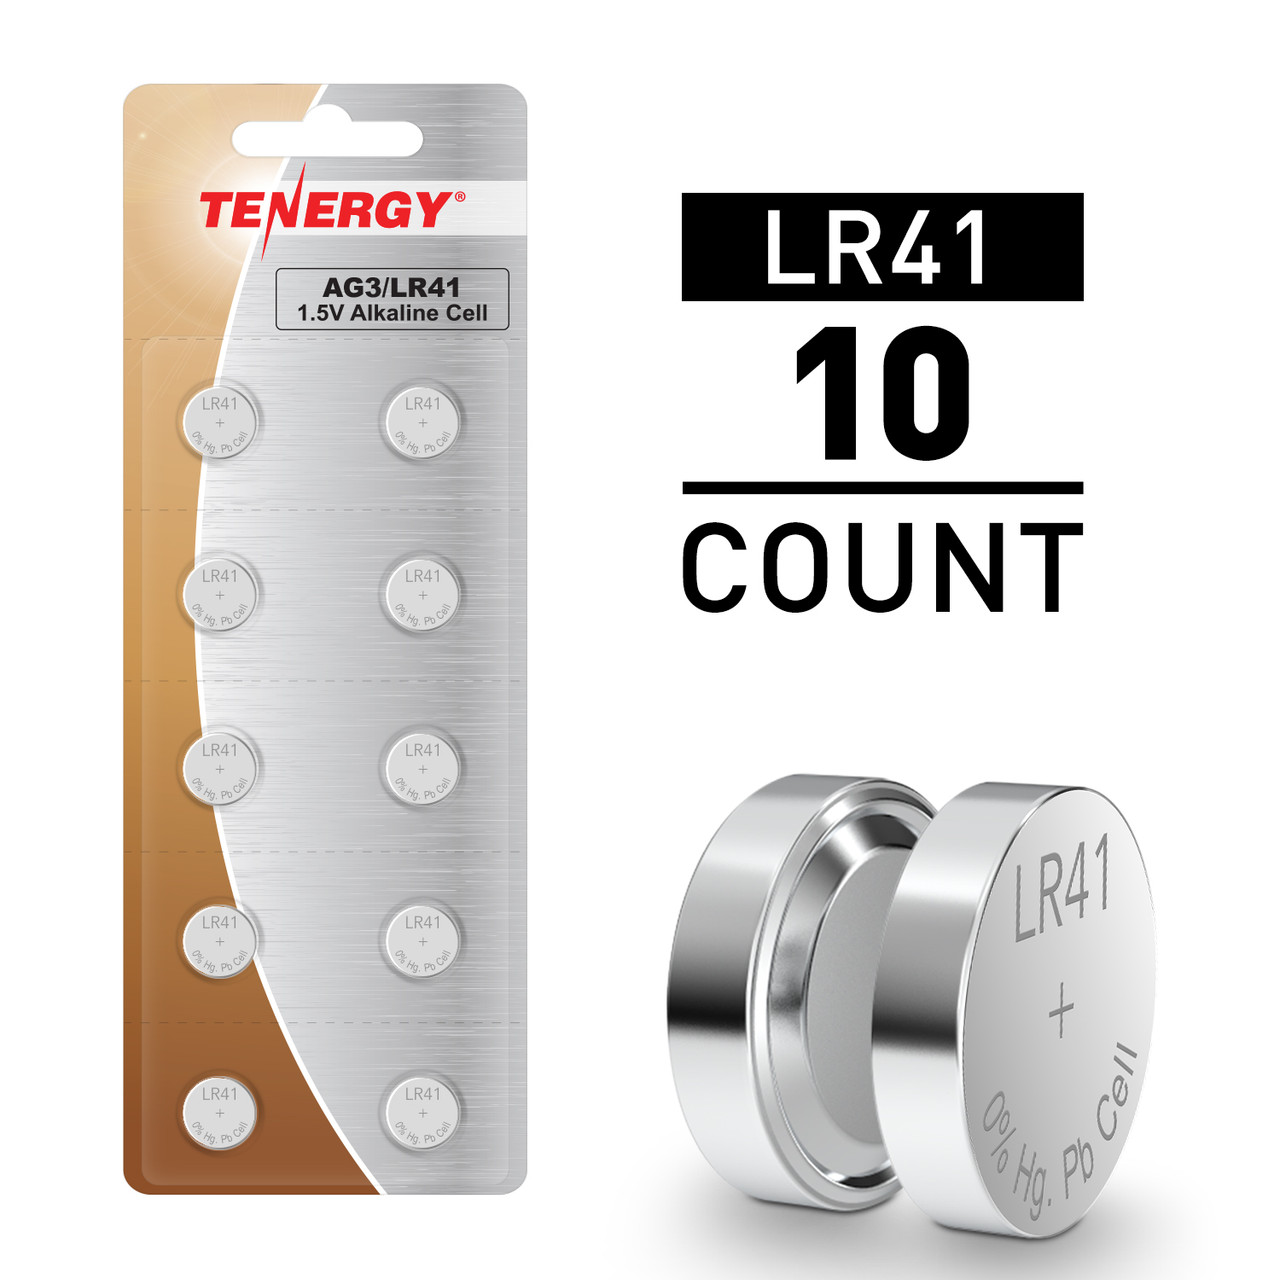 Tenergy : 1 Card: 10pcs AG3 / Lr41 1.5V Alkaline Button Cells